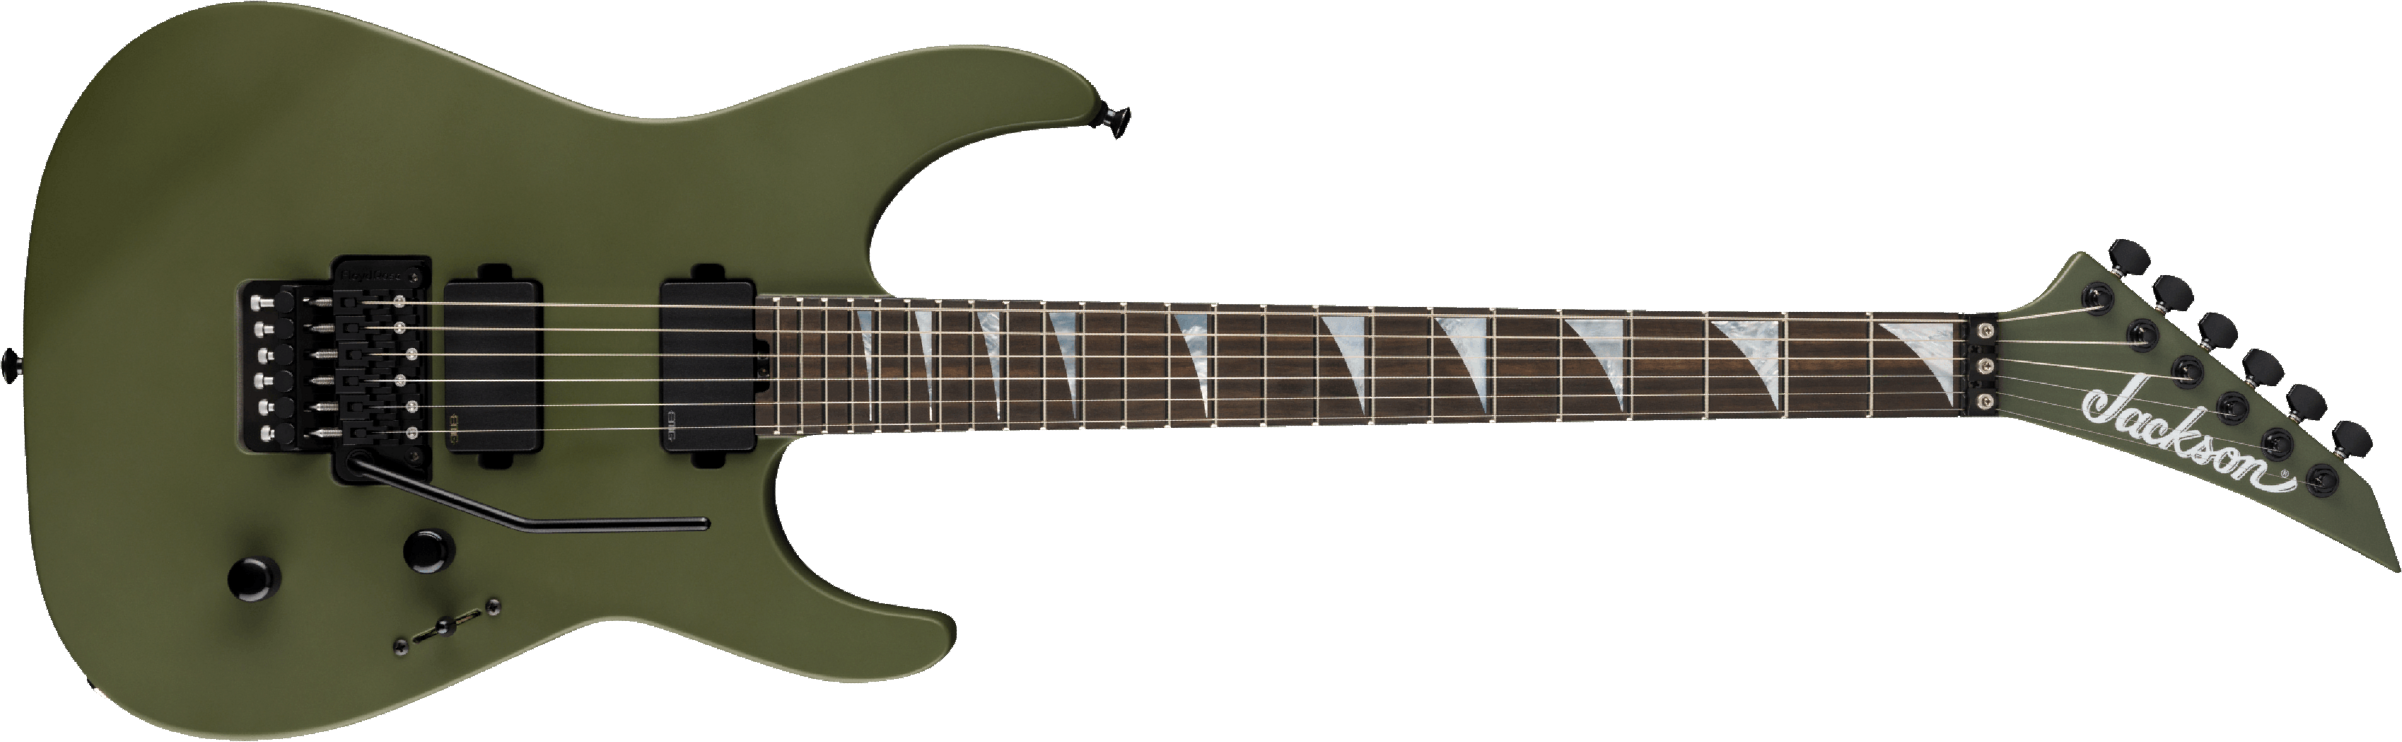 Jackson Sl2mg American Soloist Trem Hh Eb - Matte Army Drab - E-Gitarre aus Metall - Main picture